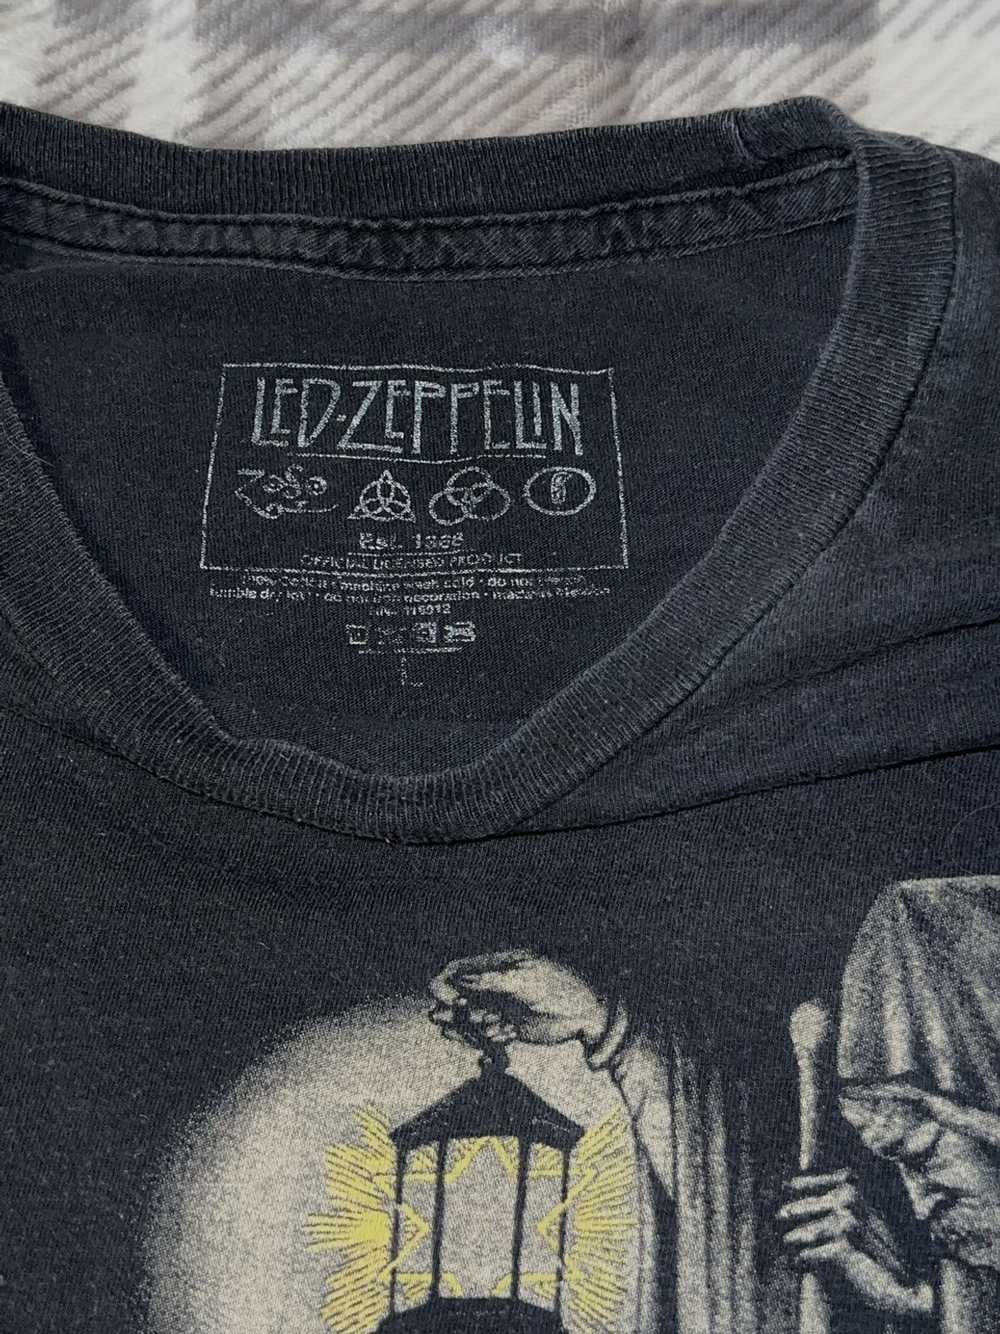 Led Zeppelin Vintage Led Zeppelin Band Tee - image 3